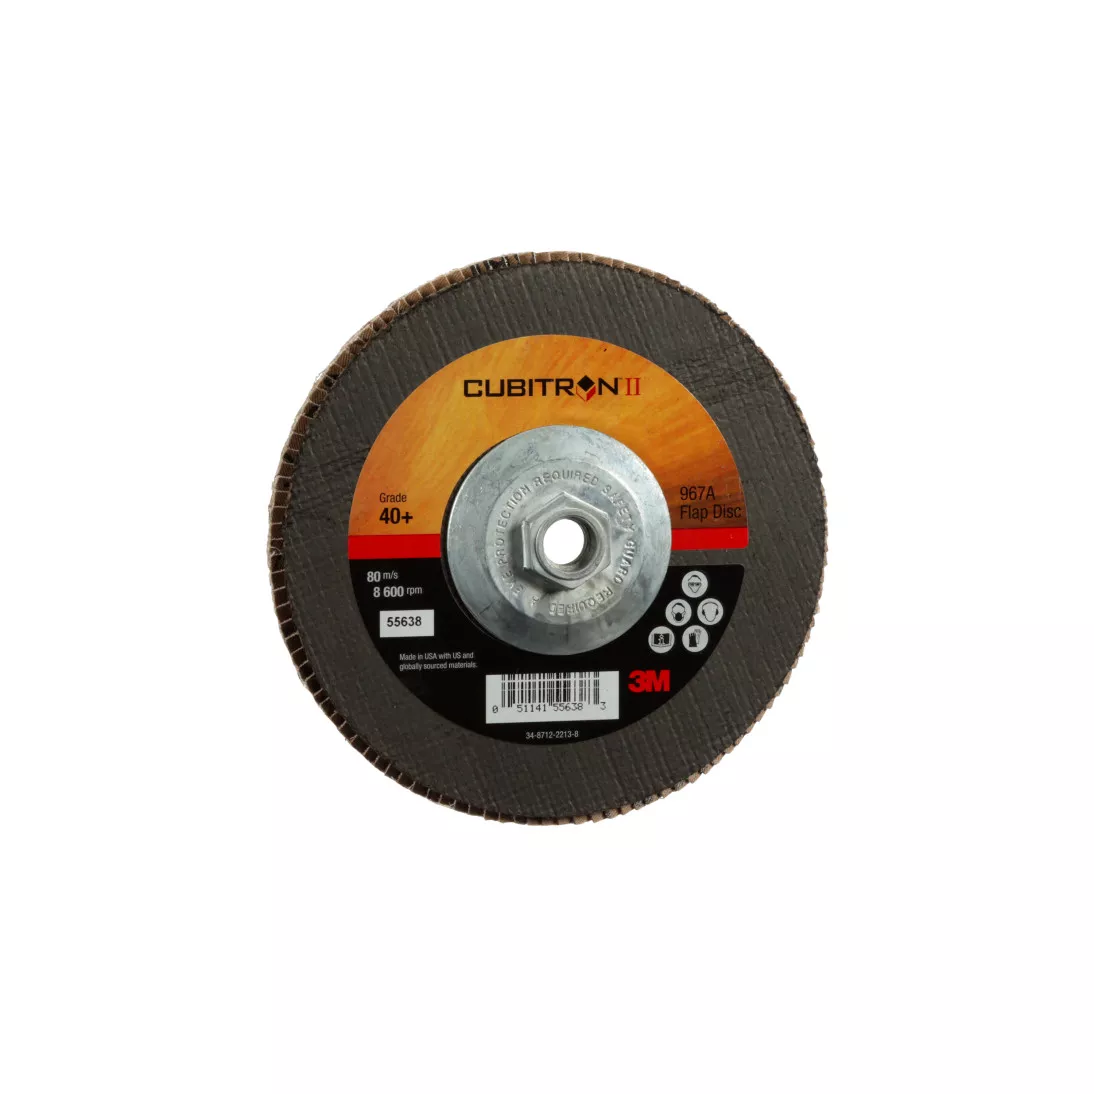 3M™ Cubitron™ II Flap Disc 967A, 40+, T27 Quick Change, 7 in x 5/8